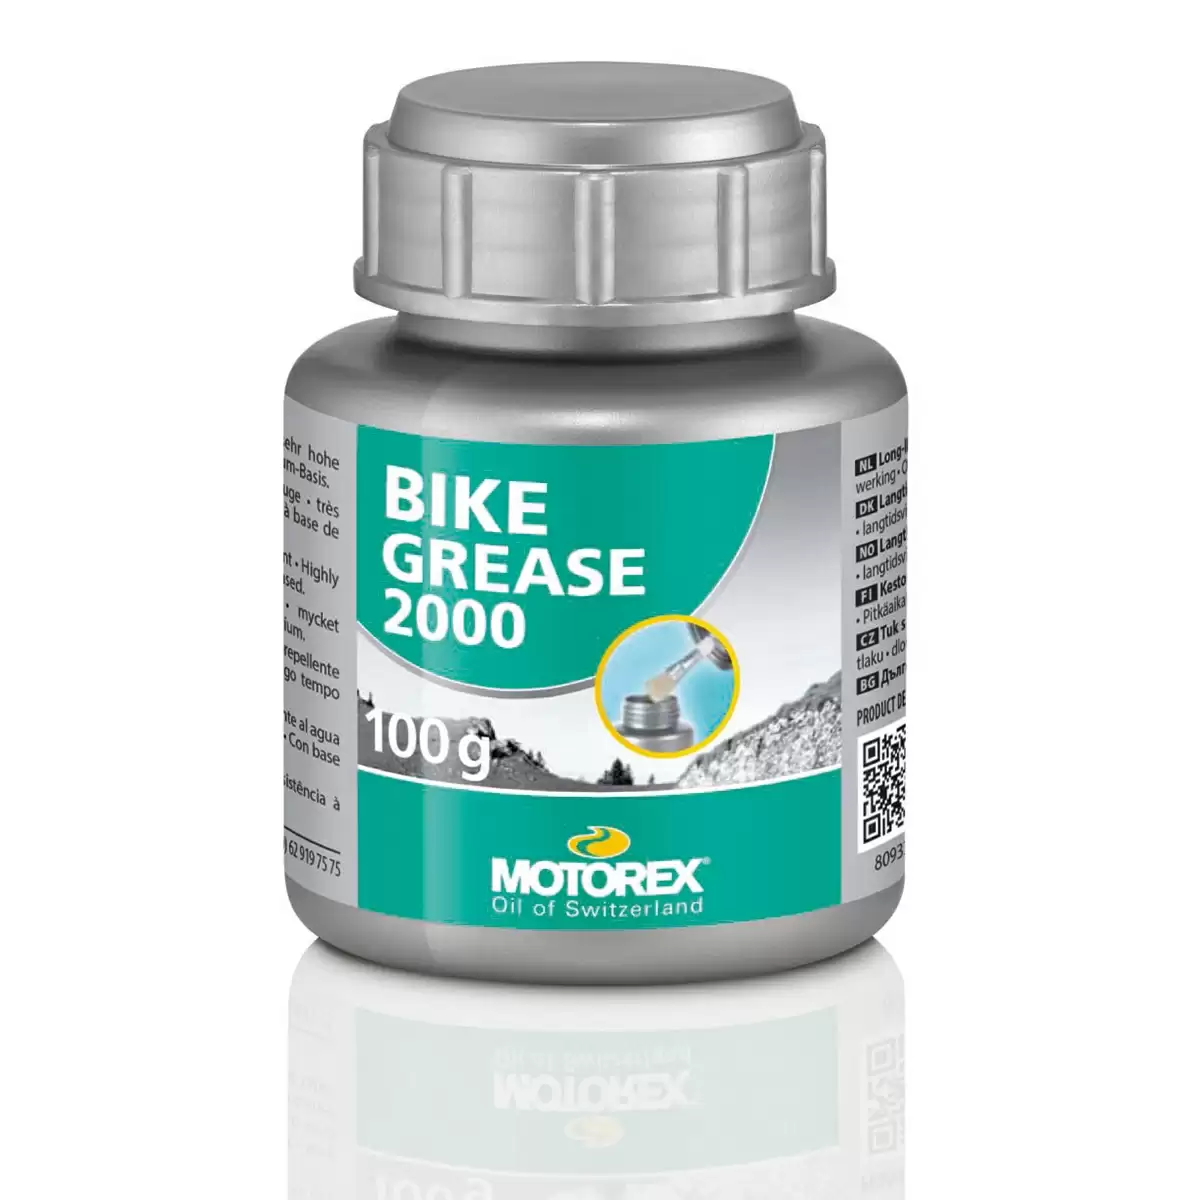 Green Bike Grease Calcium-Based 100g - image